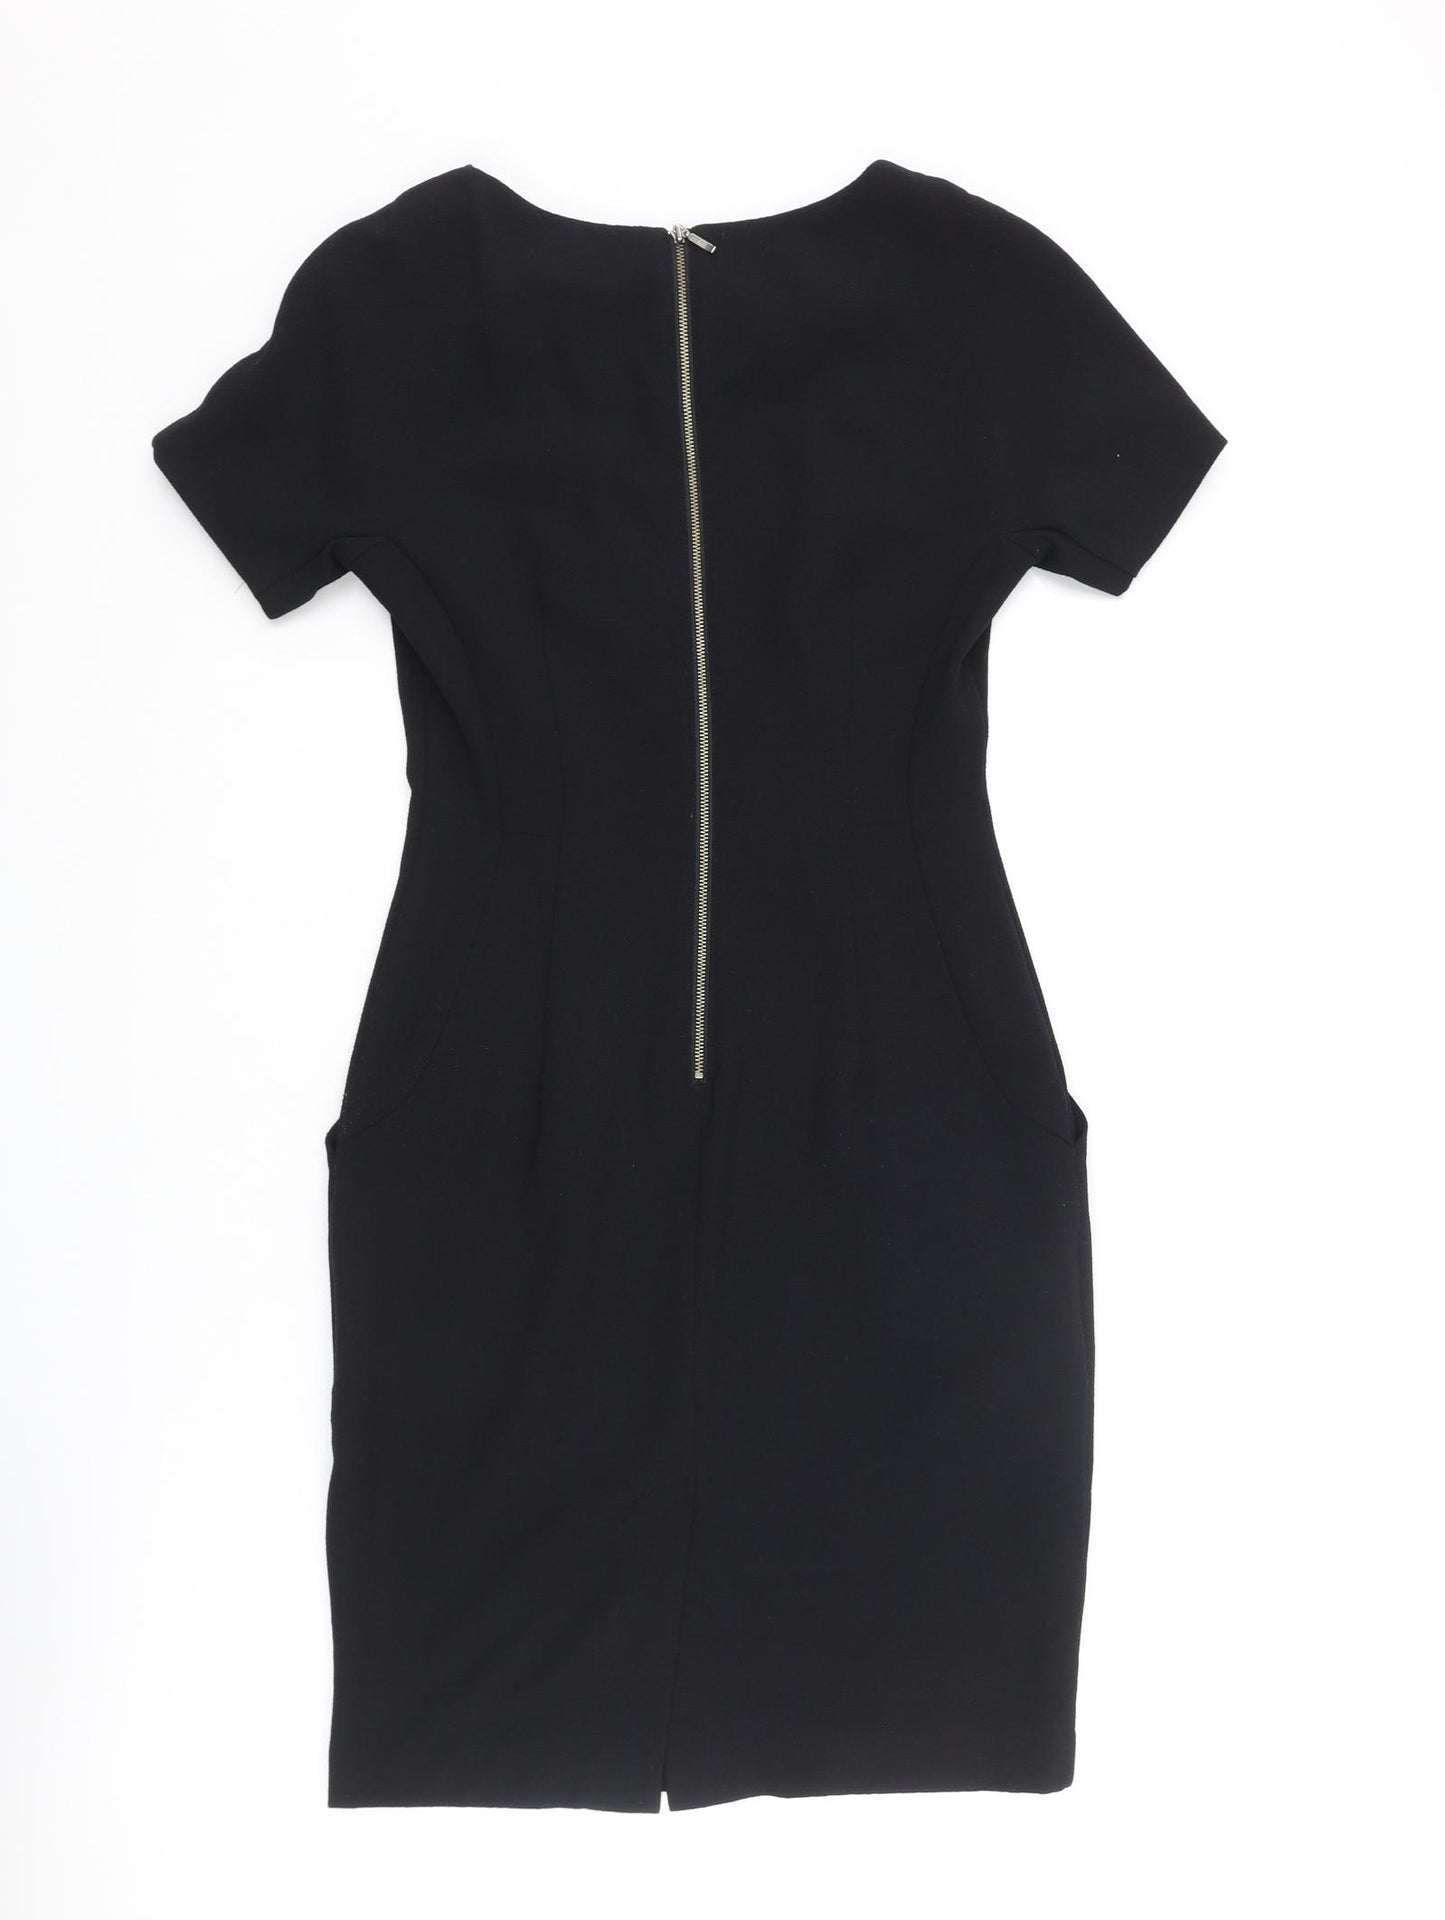 NEXT Womens Black Polyester Pencil Dress Size 6 Boat Neck Zip